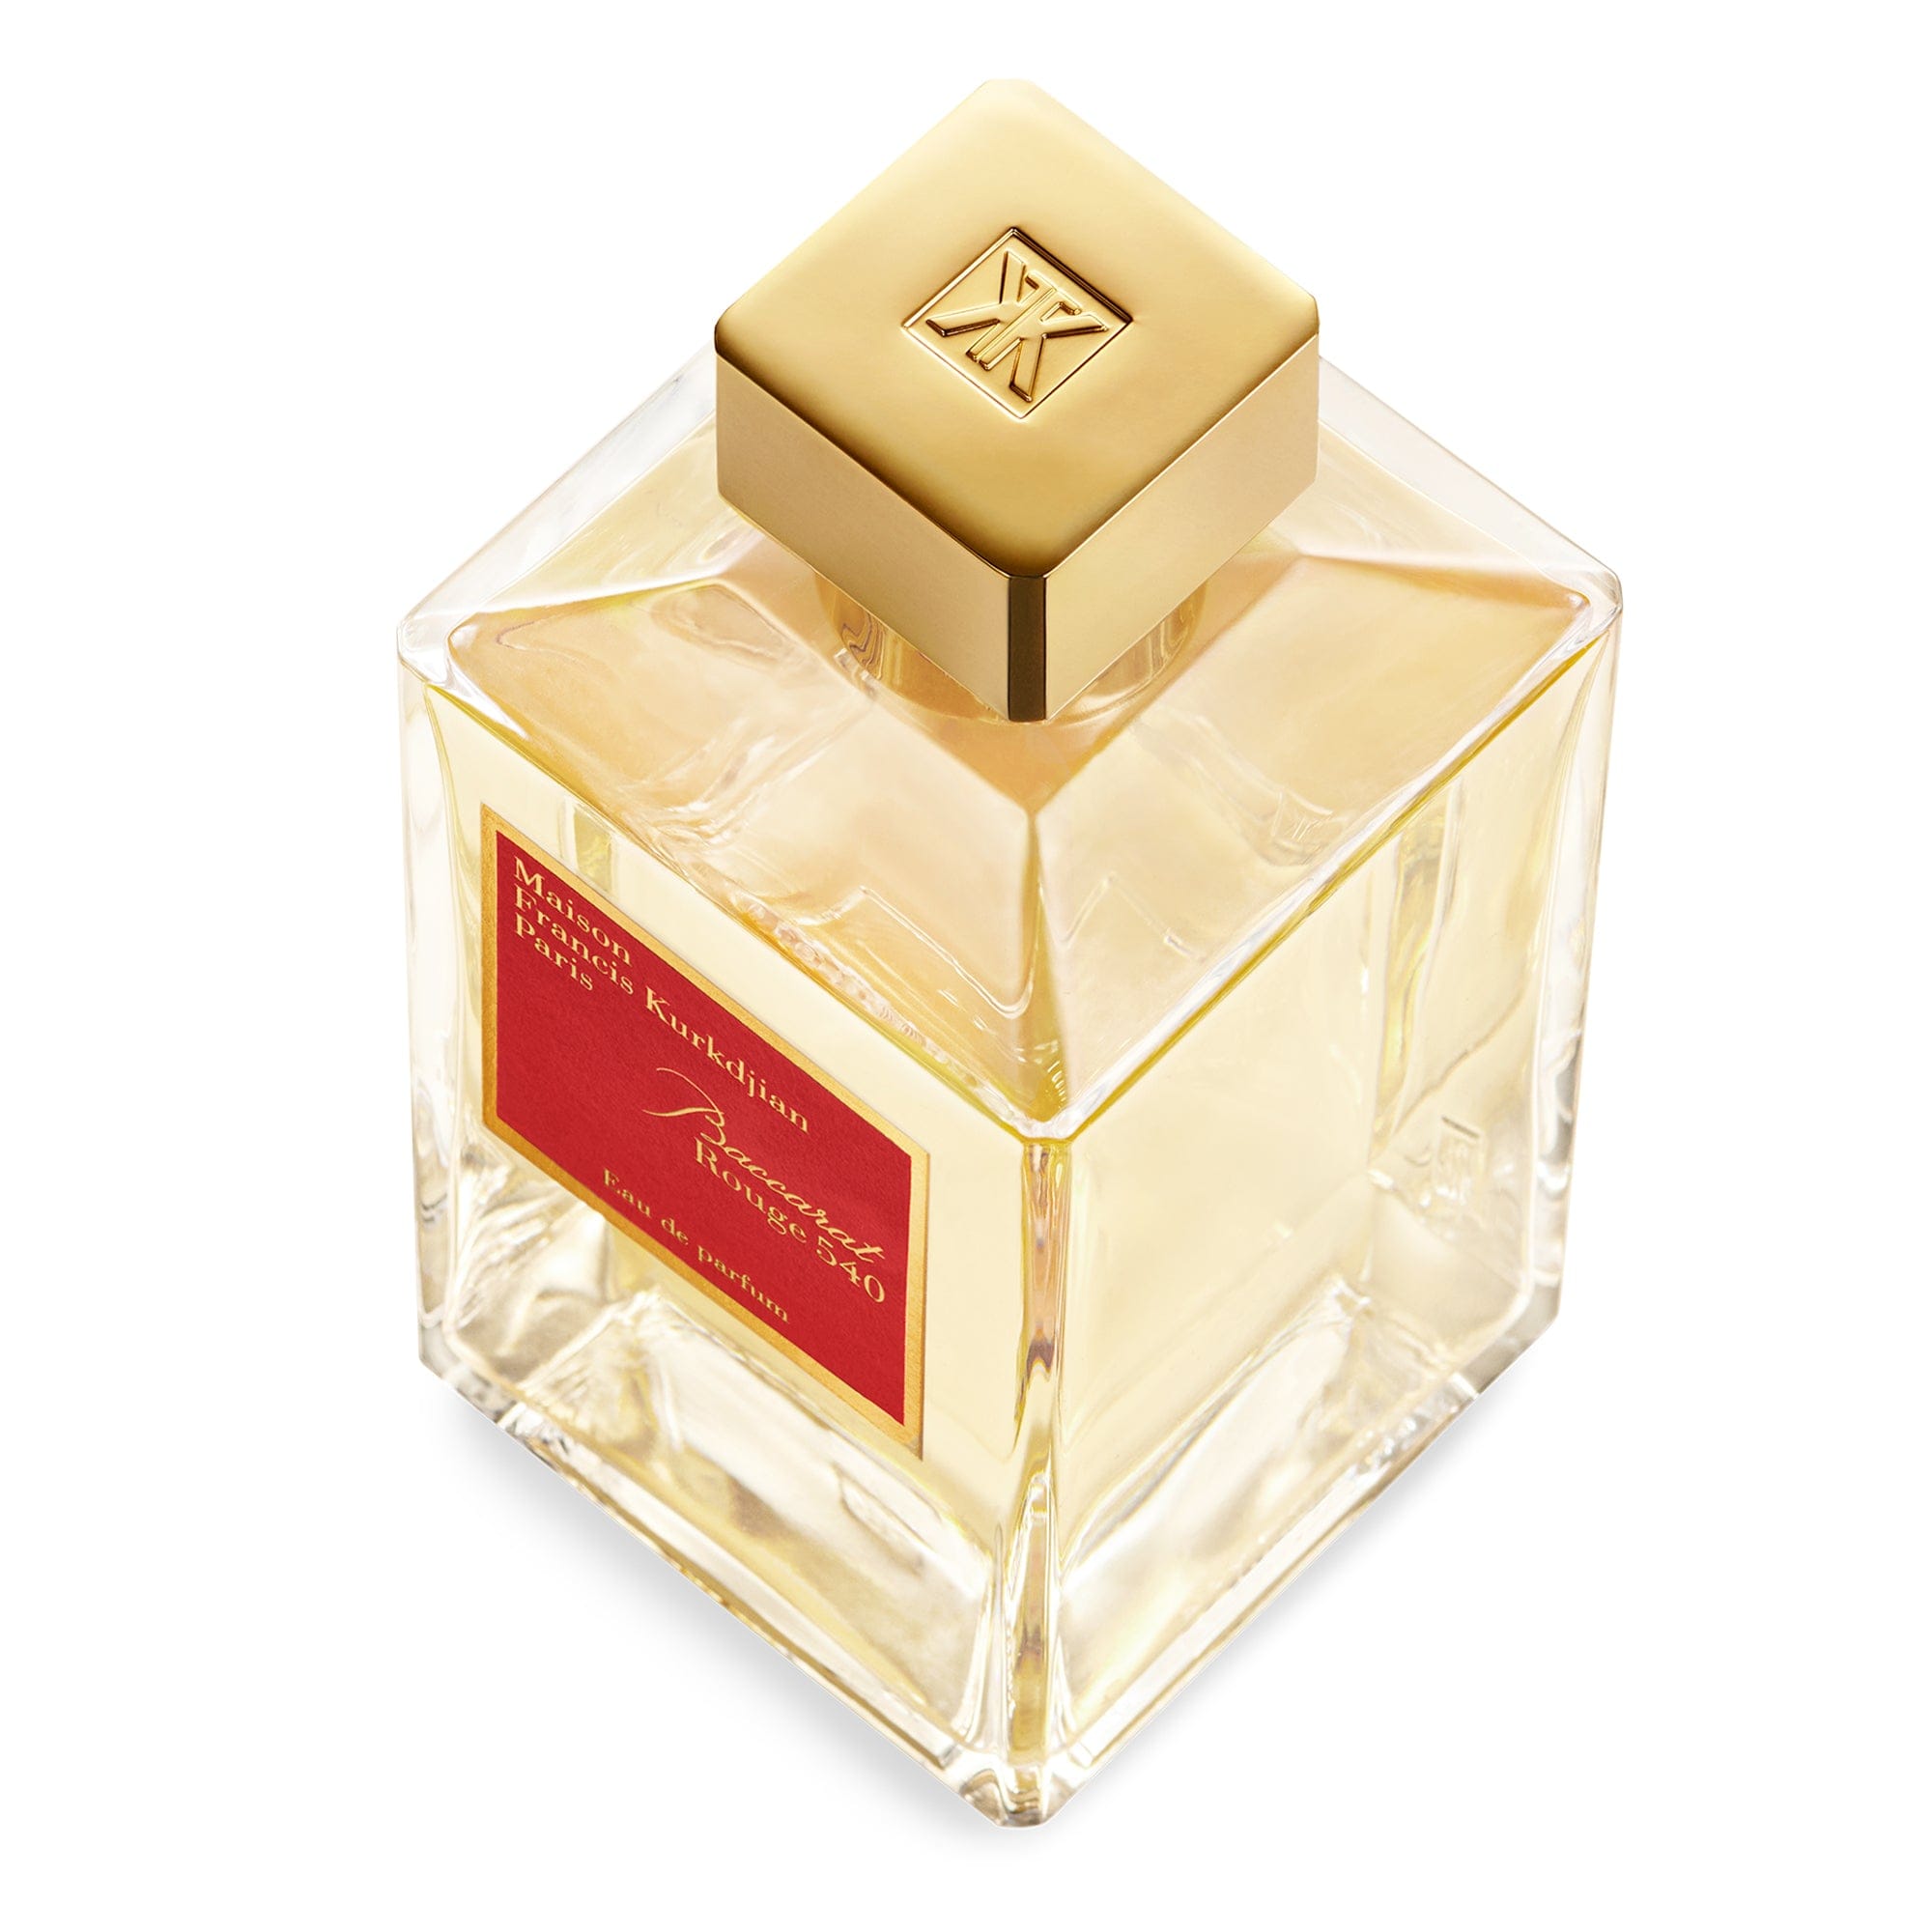 Baccarat Rouge 540 de Maison Francis Kurkdjian Eau de Parfum